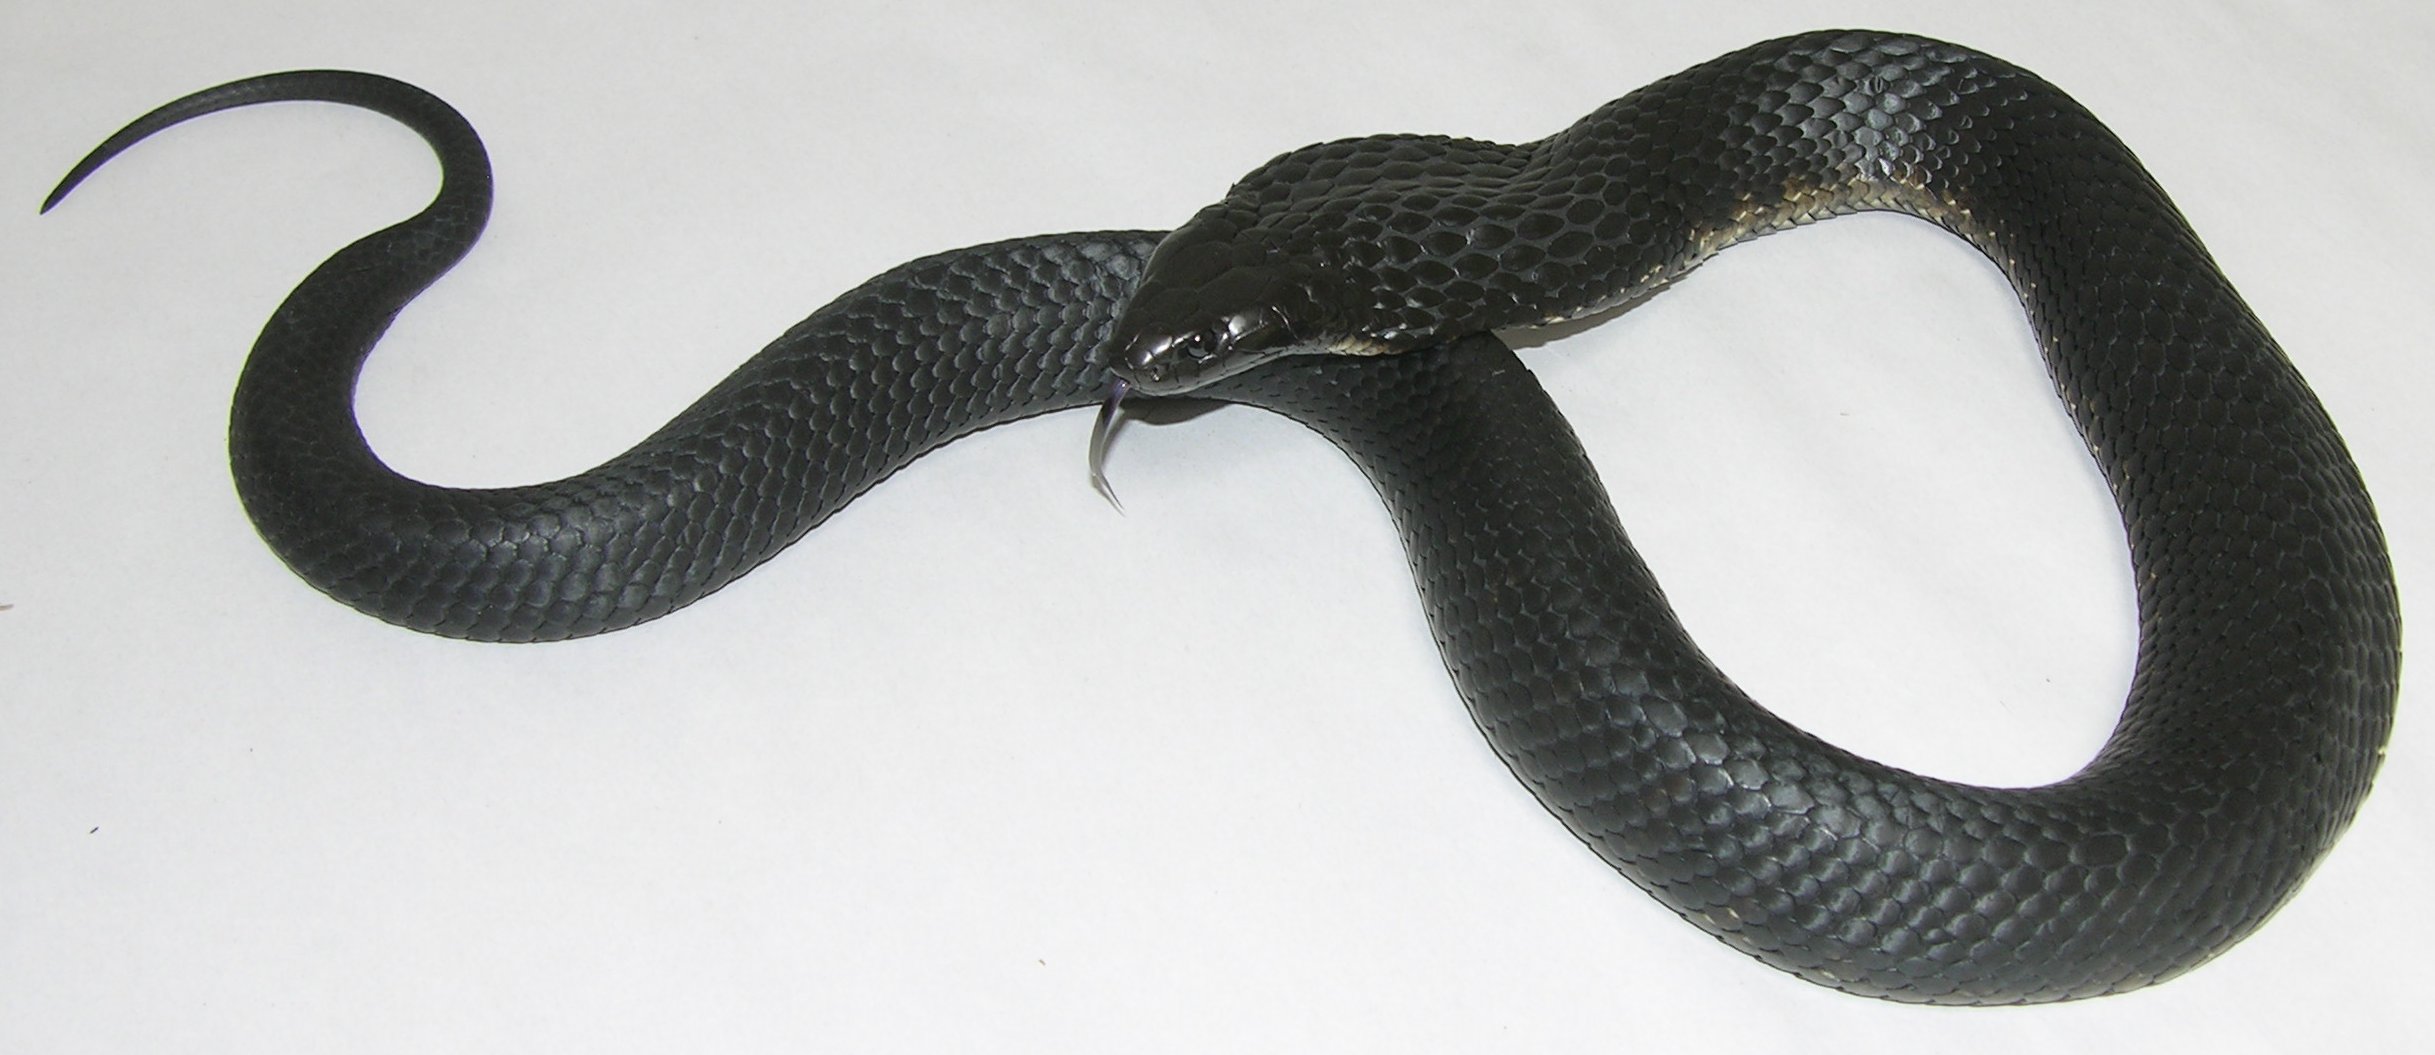 Змея 4 2023. Black Tiger Snake. Экстракт черной змеи. Ap9033-02 Black/Snake Grey.